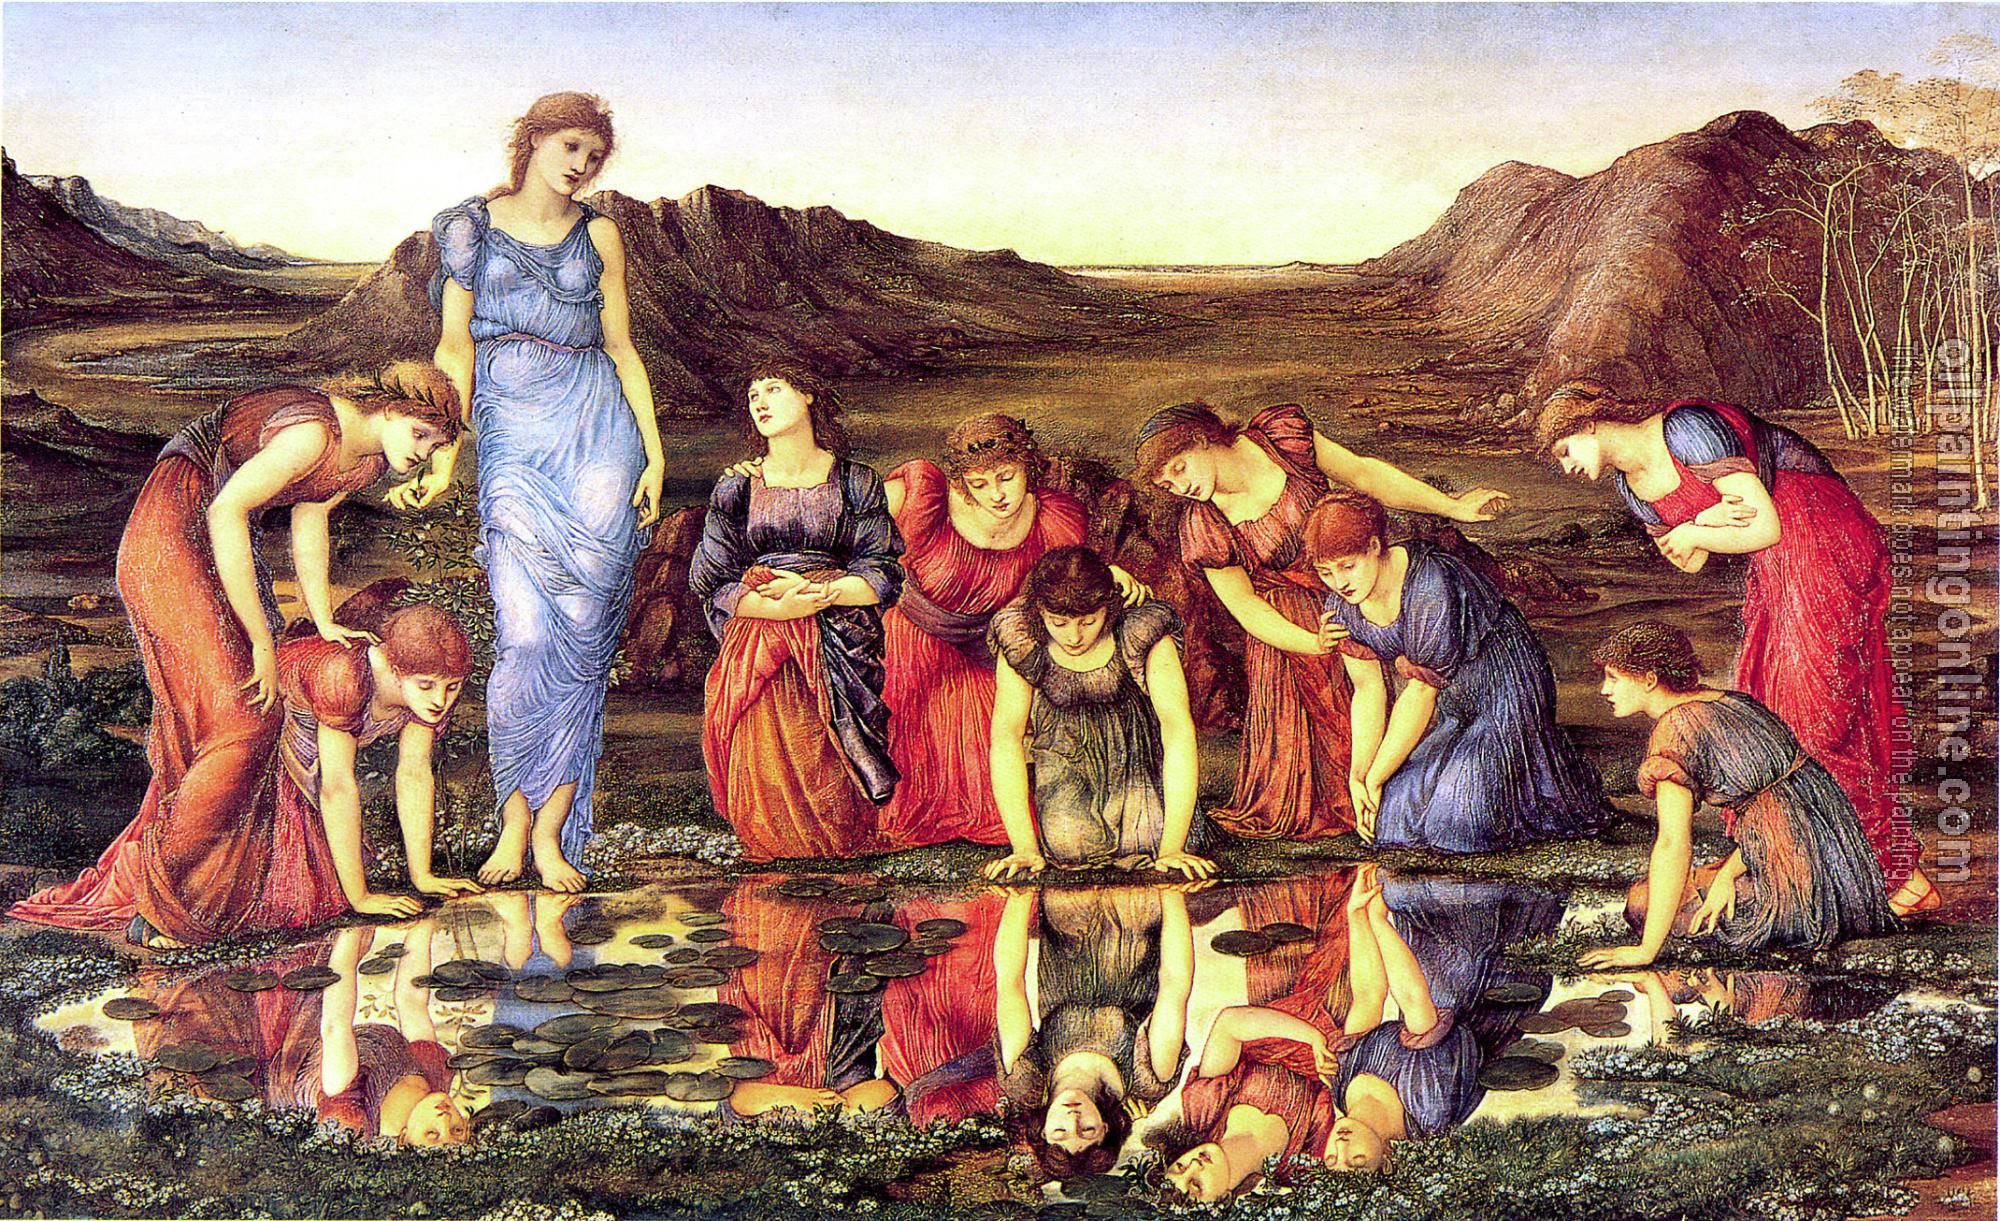 Burne-Jones, Sir Edward Coley - The Mirror of Venus